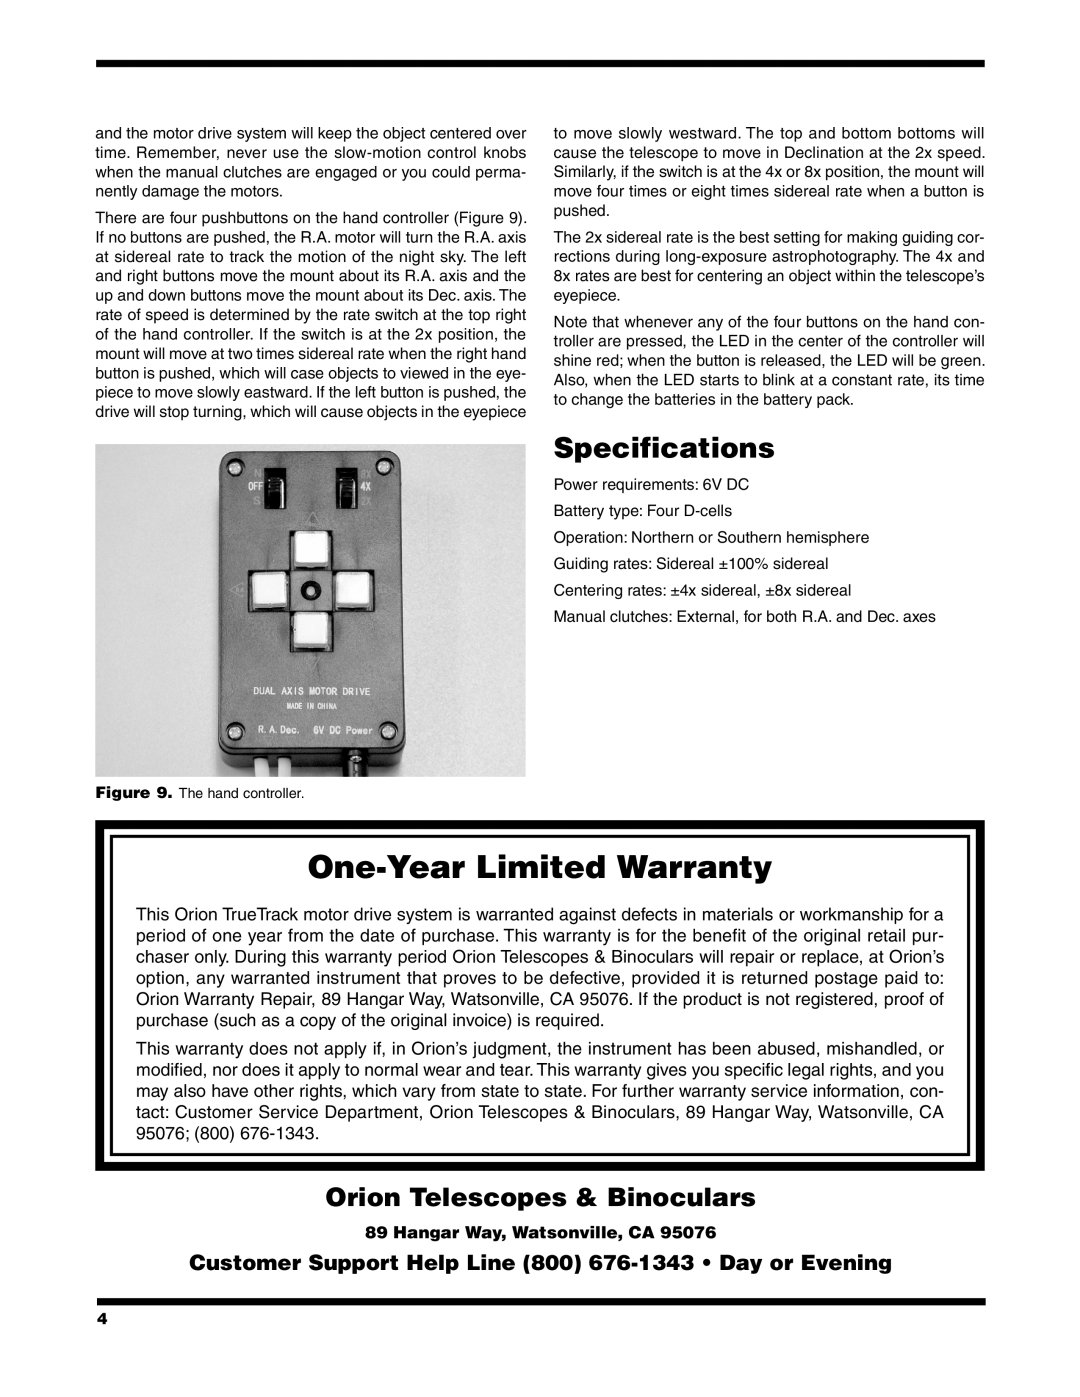 Orion 7832 manual Specifications, Hangar Way, Watsonville, CA, One-YearLimited Warranty, Orion Telescopes & Binoculars 